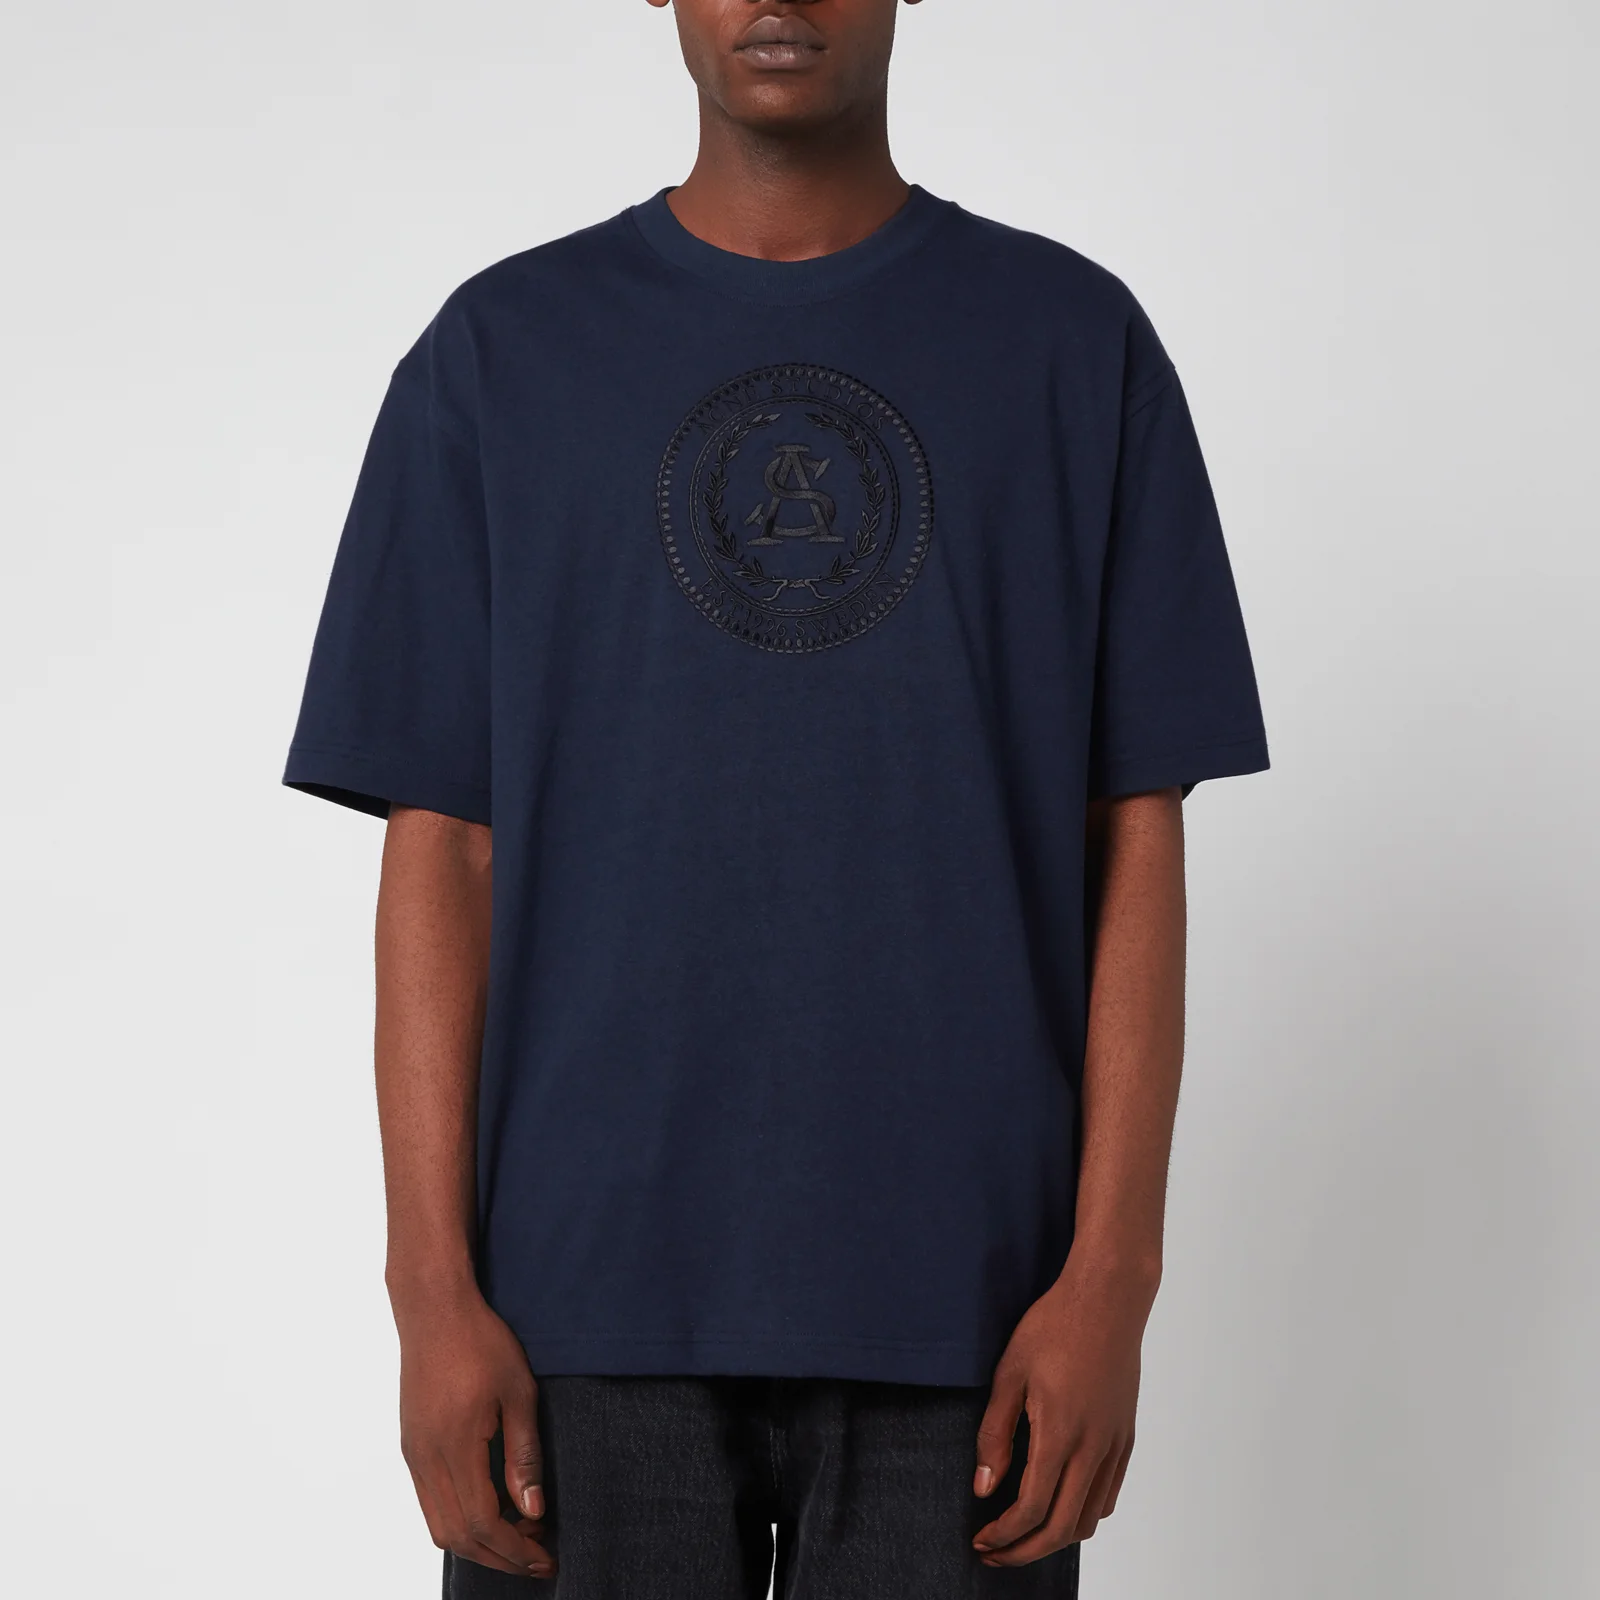 Acne Studios Men's Embroidered Logo T-Shirt - Navy Image 1